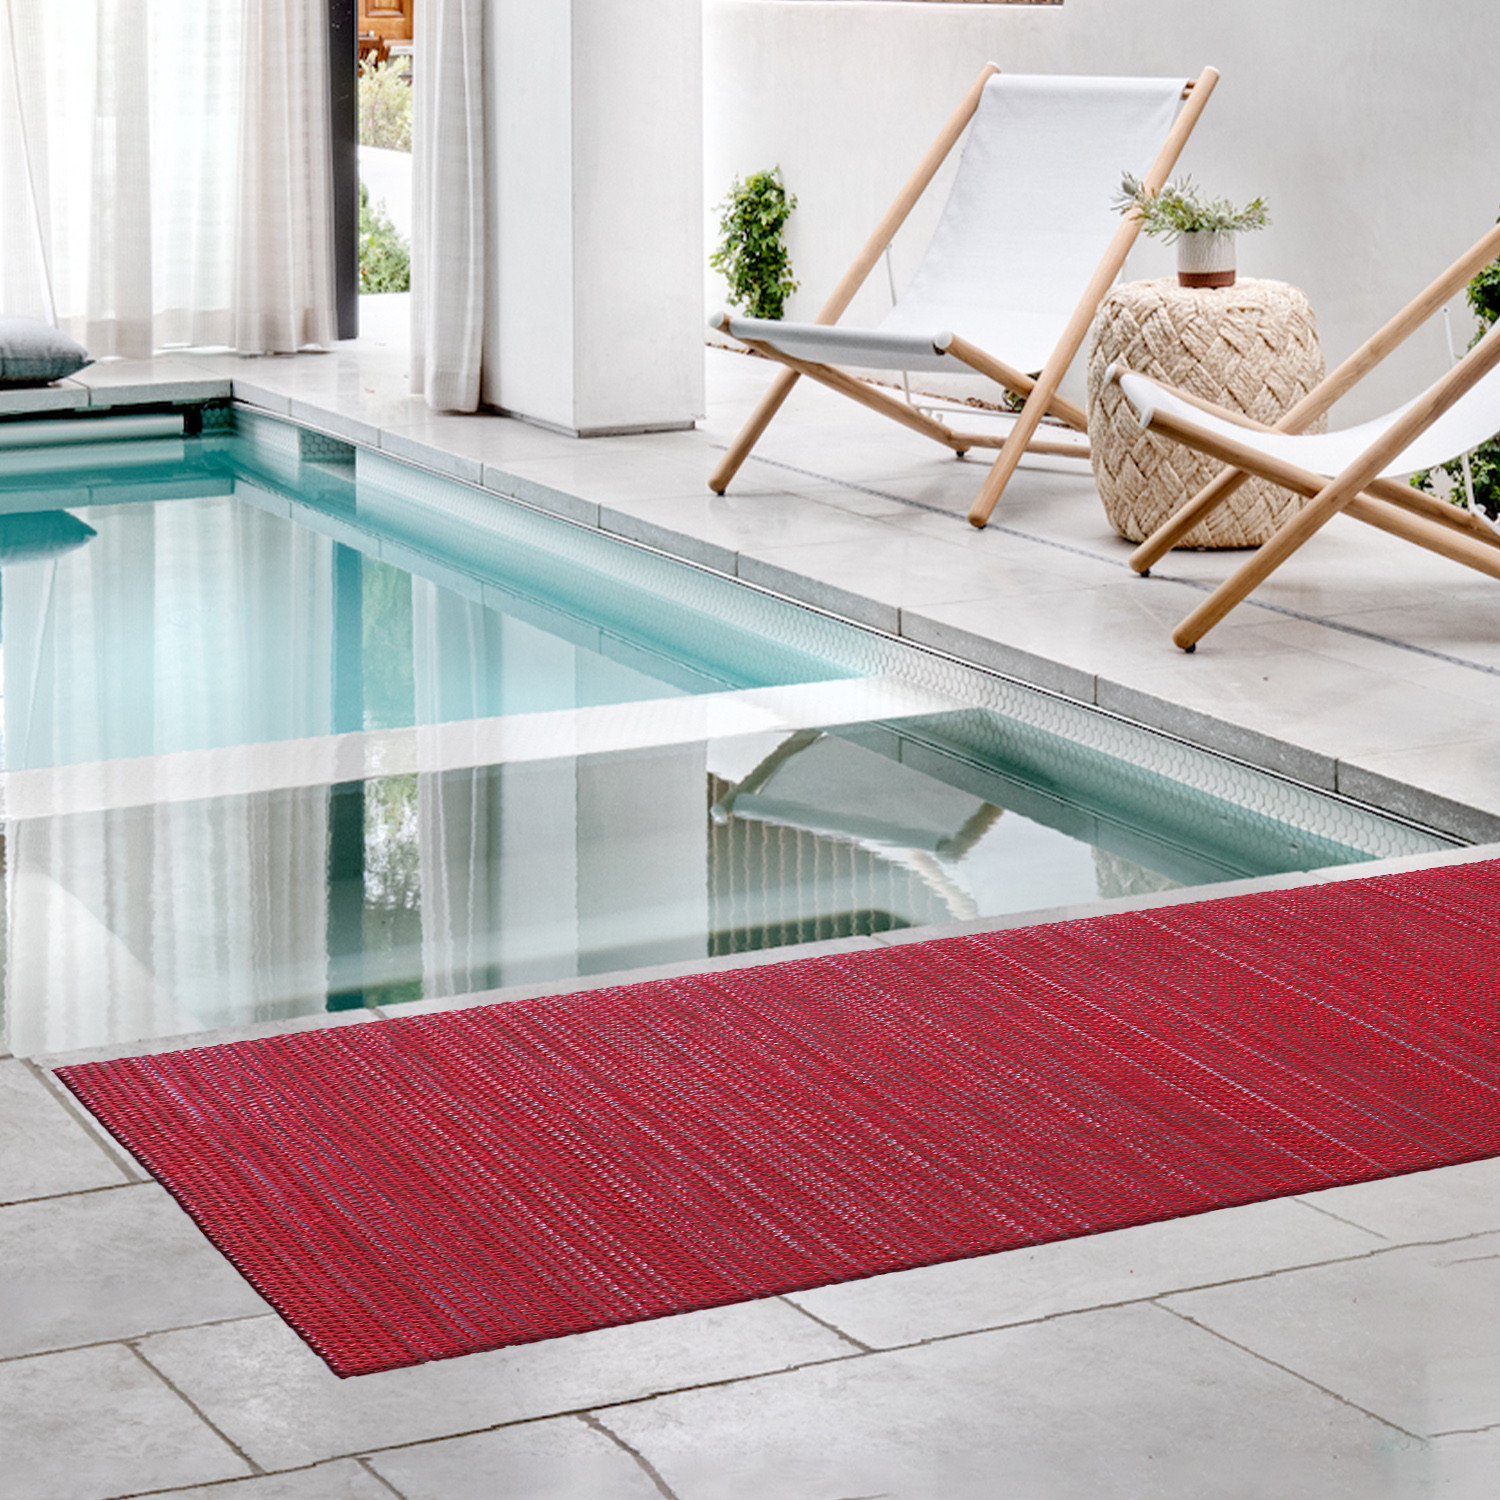 Kuber Industries Rubber Waterproof Anti-Skid Swimming Pool Mat|Shower Mat|Rainmat For Entrance Area,Bathroom,2 x 16 Feet (Red)